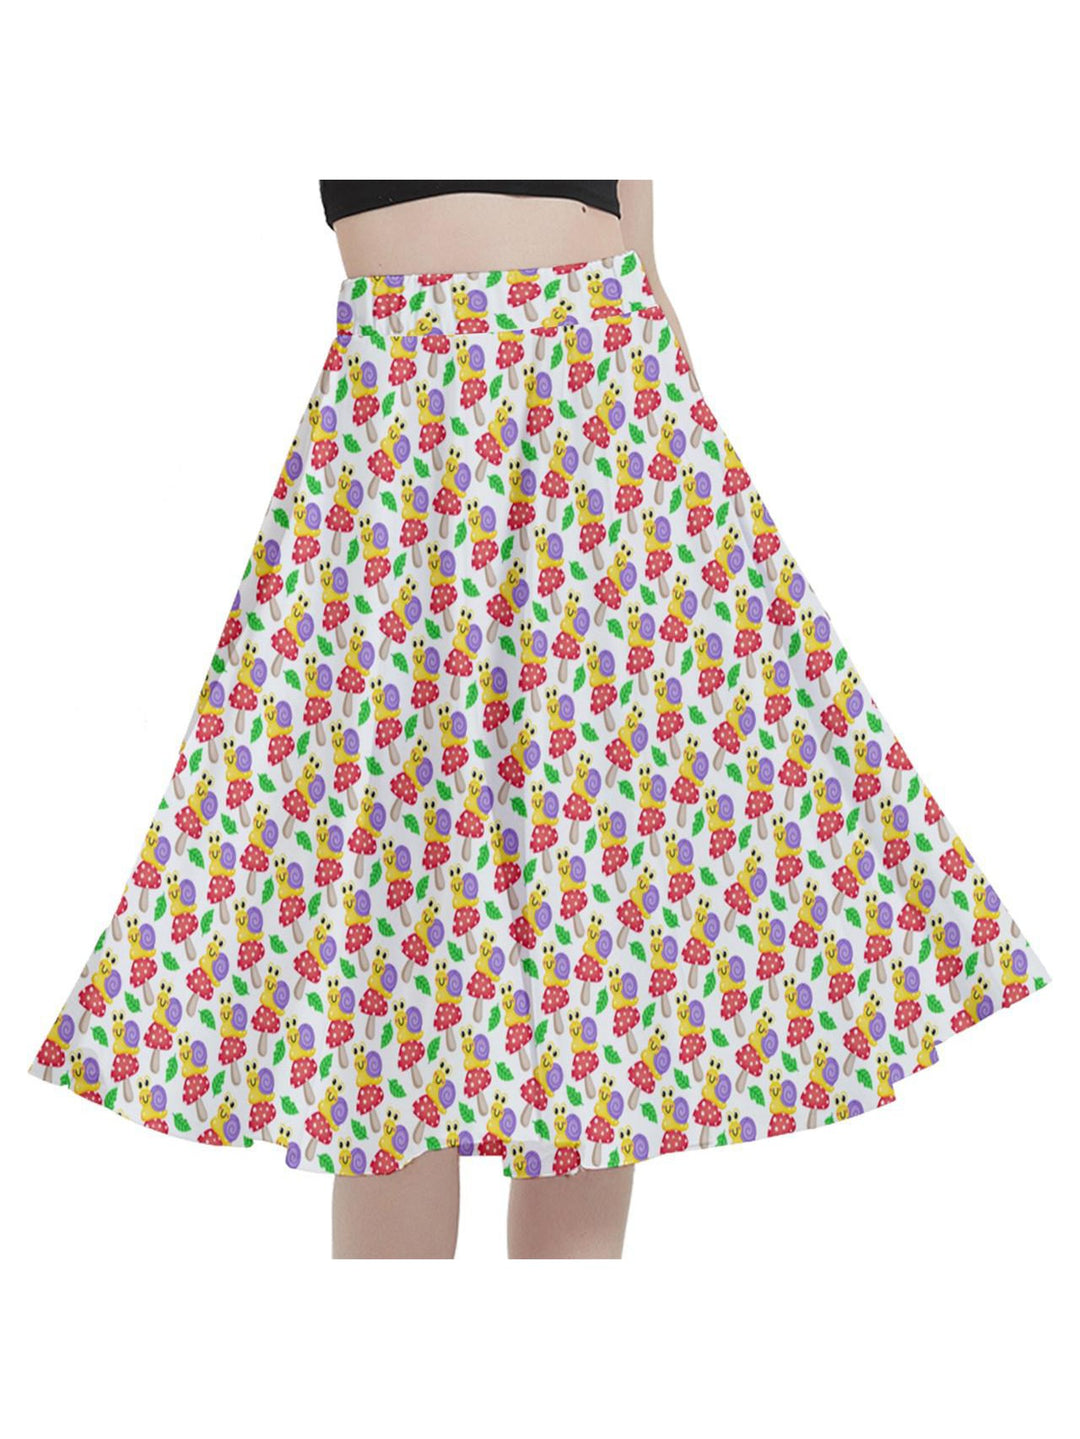 Snailtopia Full Circle Skirt